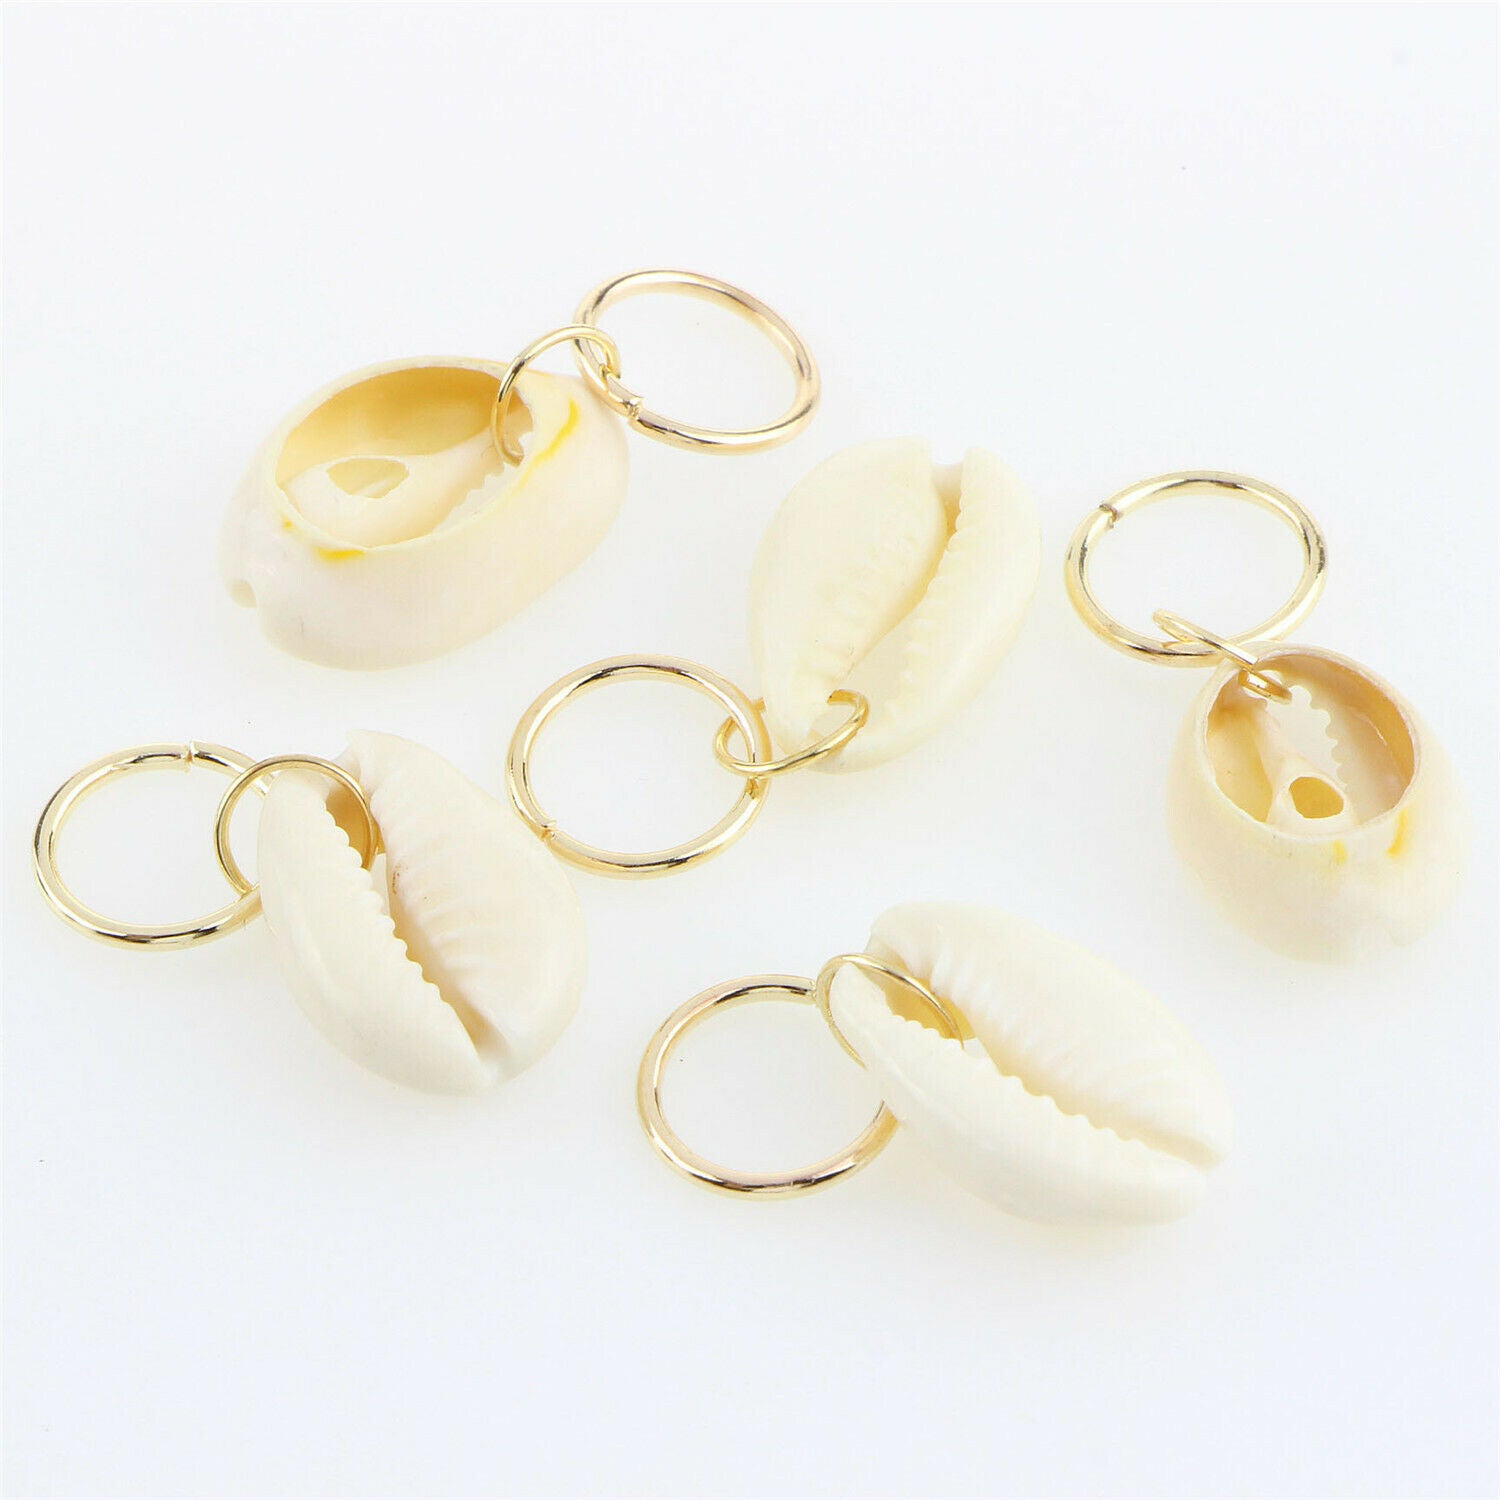 80 Mix Lot Dreadlocks Braid Ring Cuffs Beads Hair Clips Pendants DIY Jewelry Set